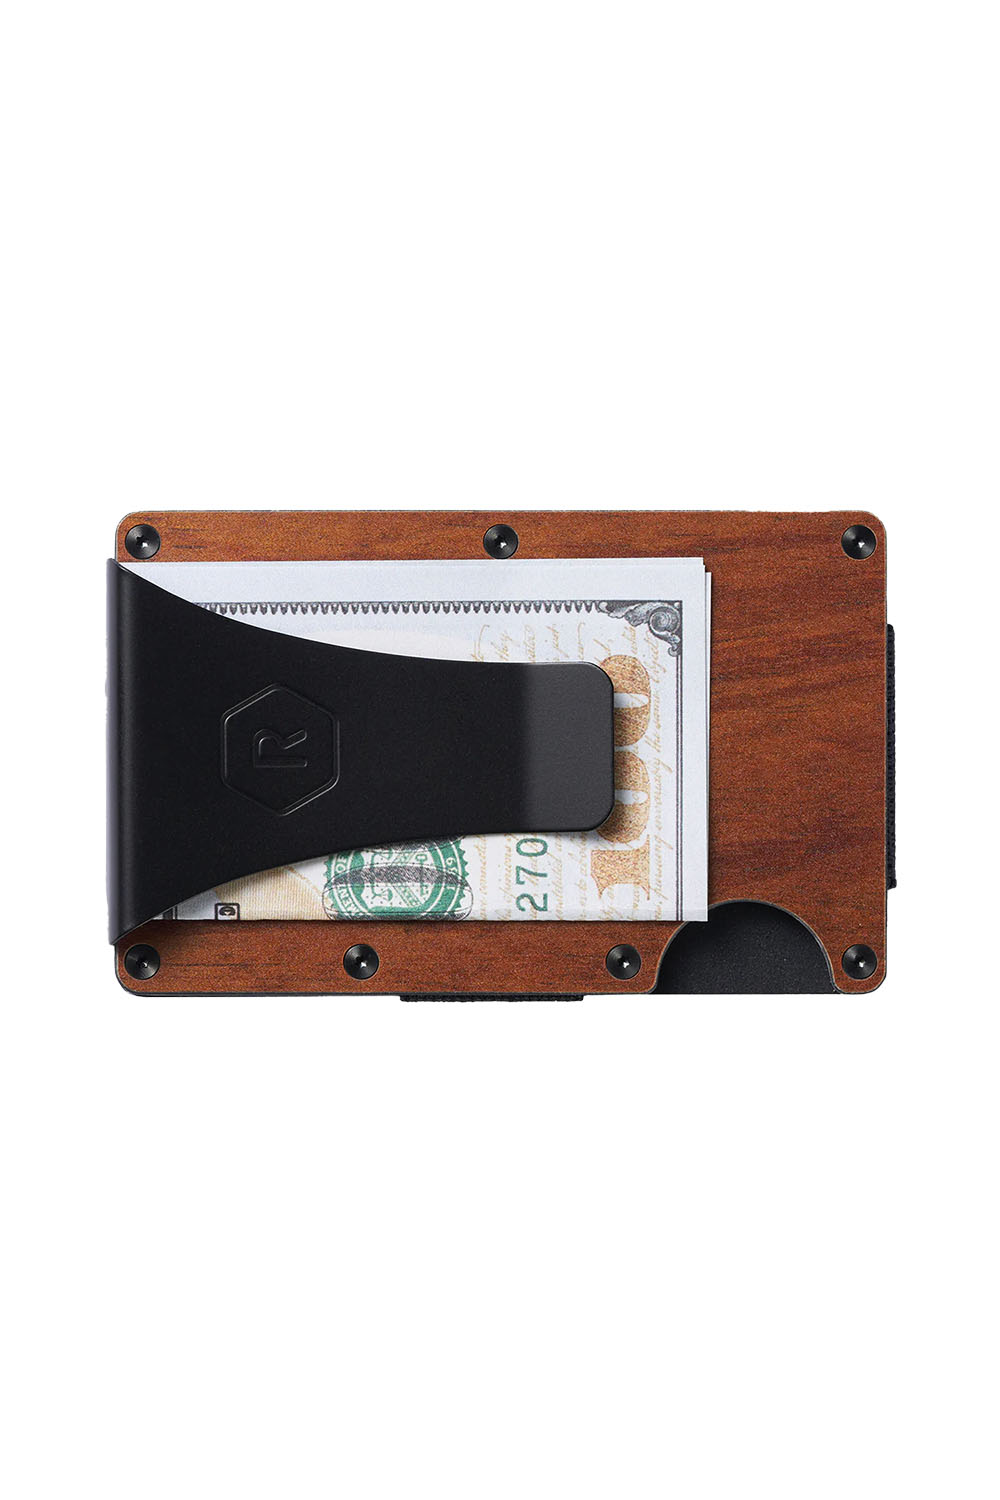 Ridge Wallet - Aluminum - Money Clip - Mopane Wood - Front